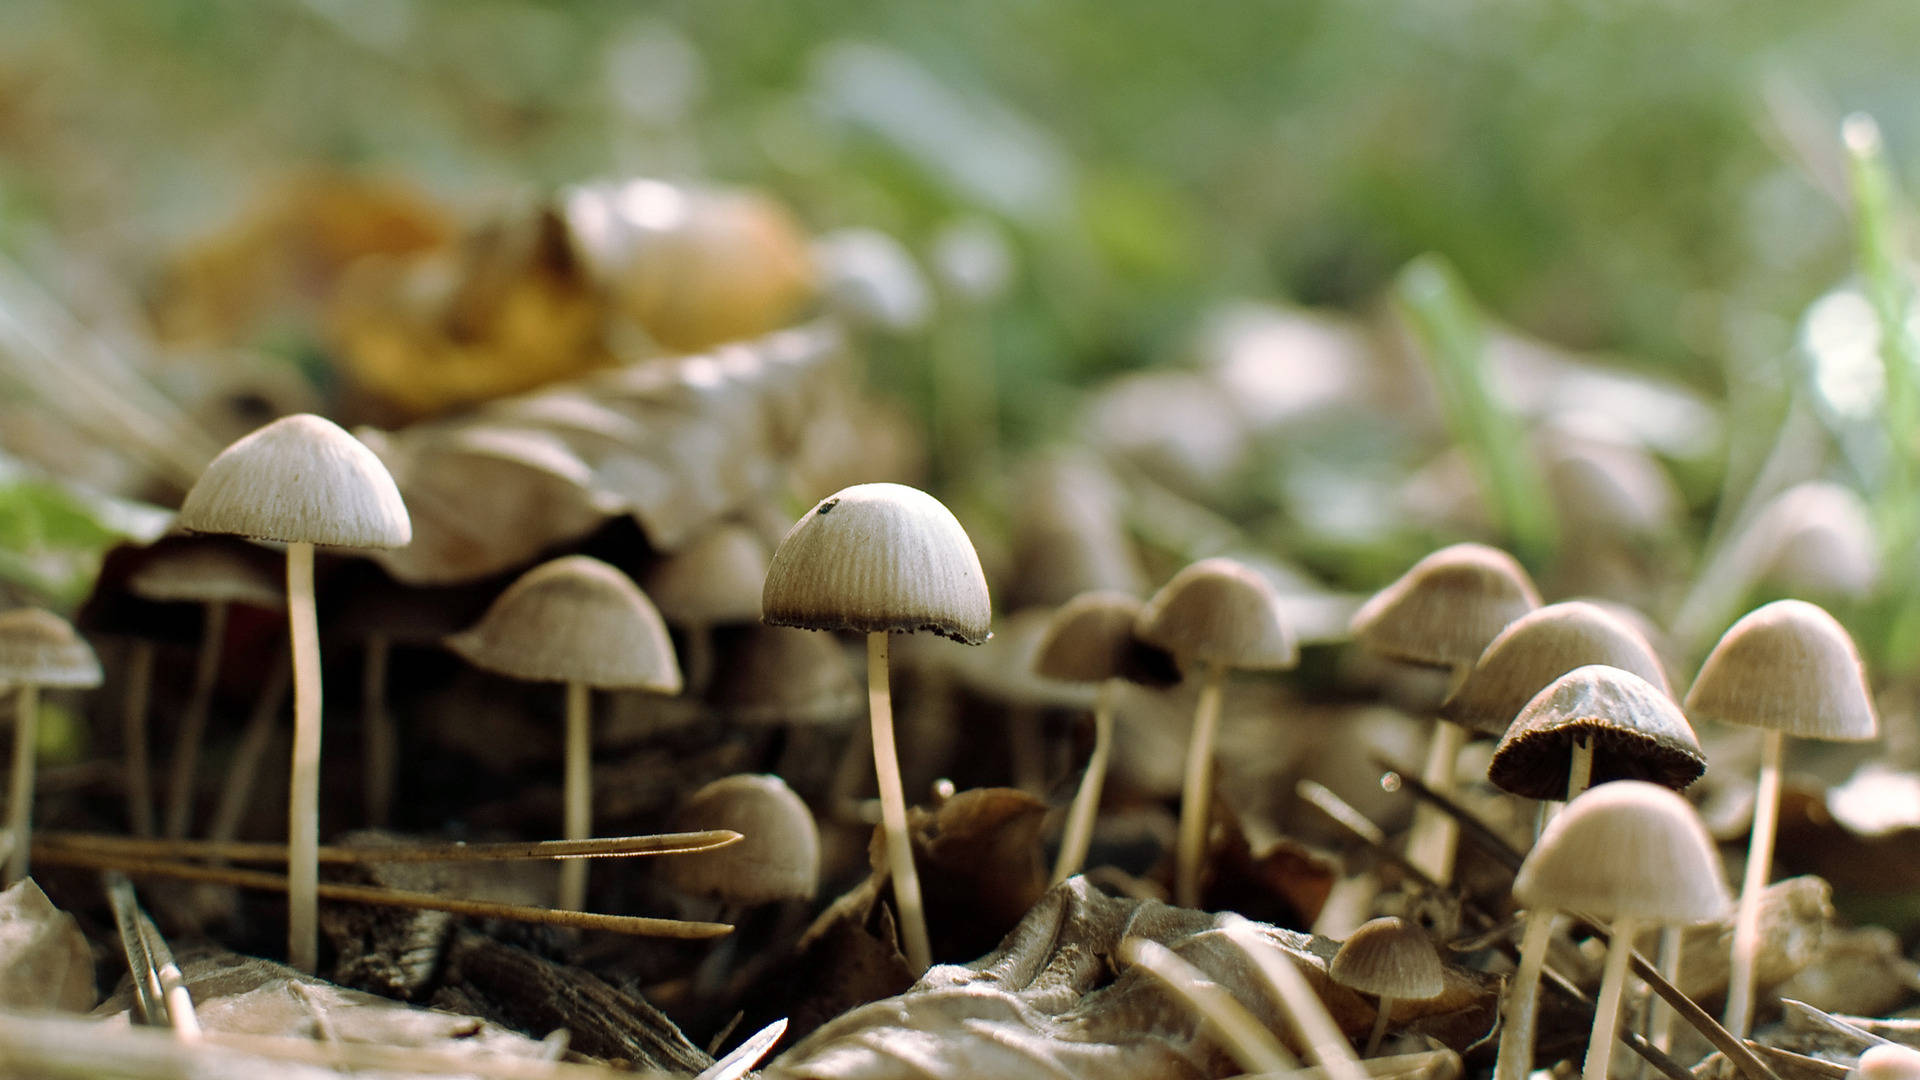 Cluster Of Cute Mushrooms Background